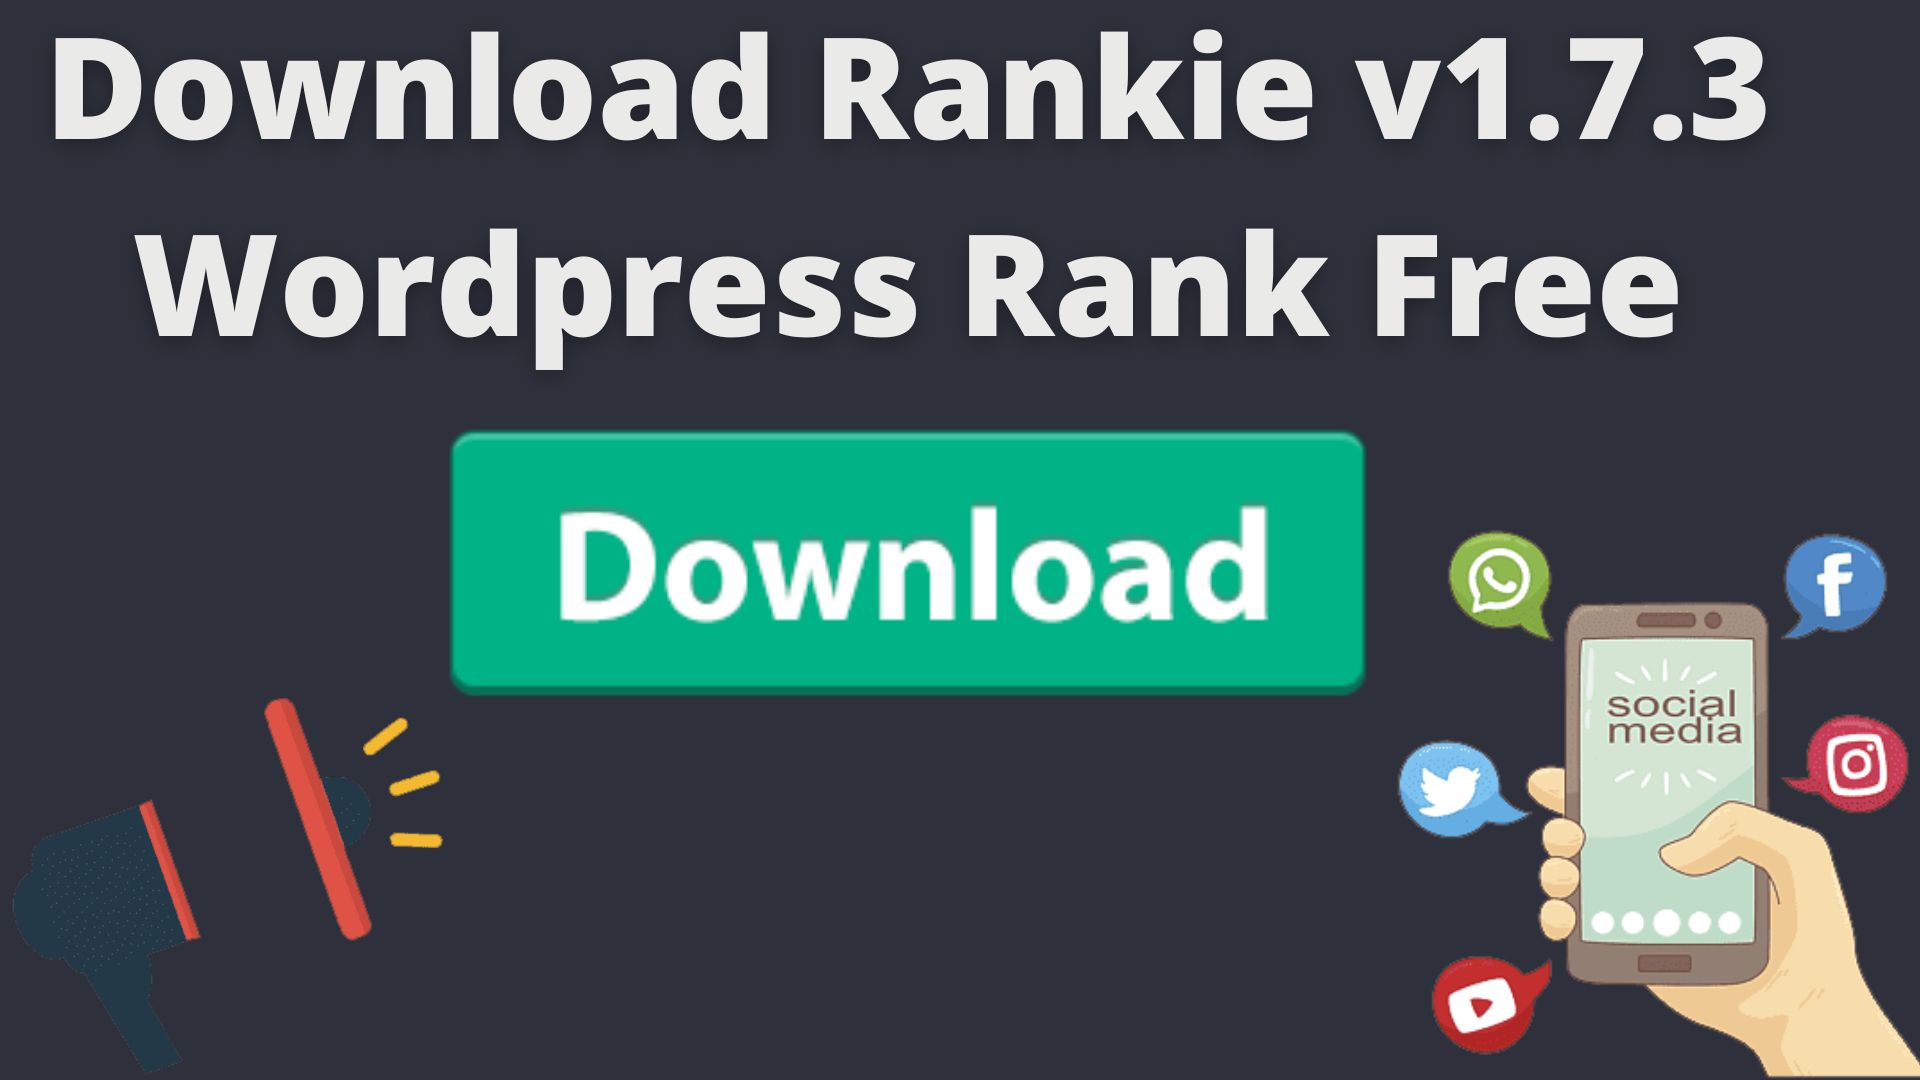 Download rankie v1. 7. 3 wordpress rank free